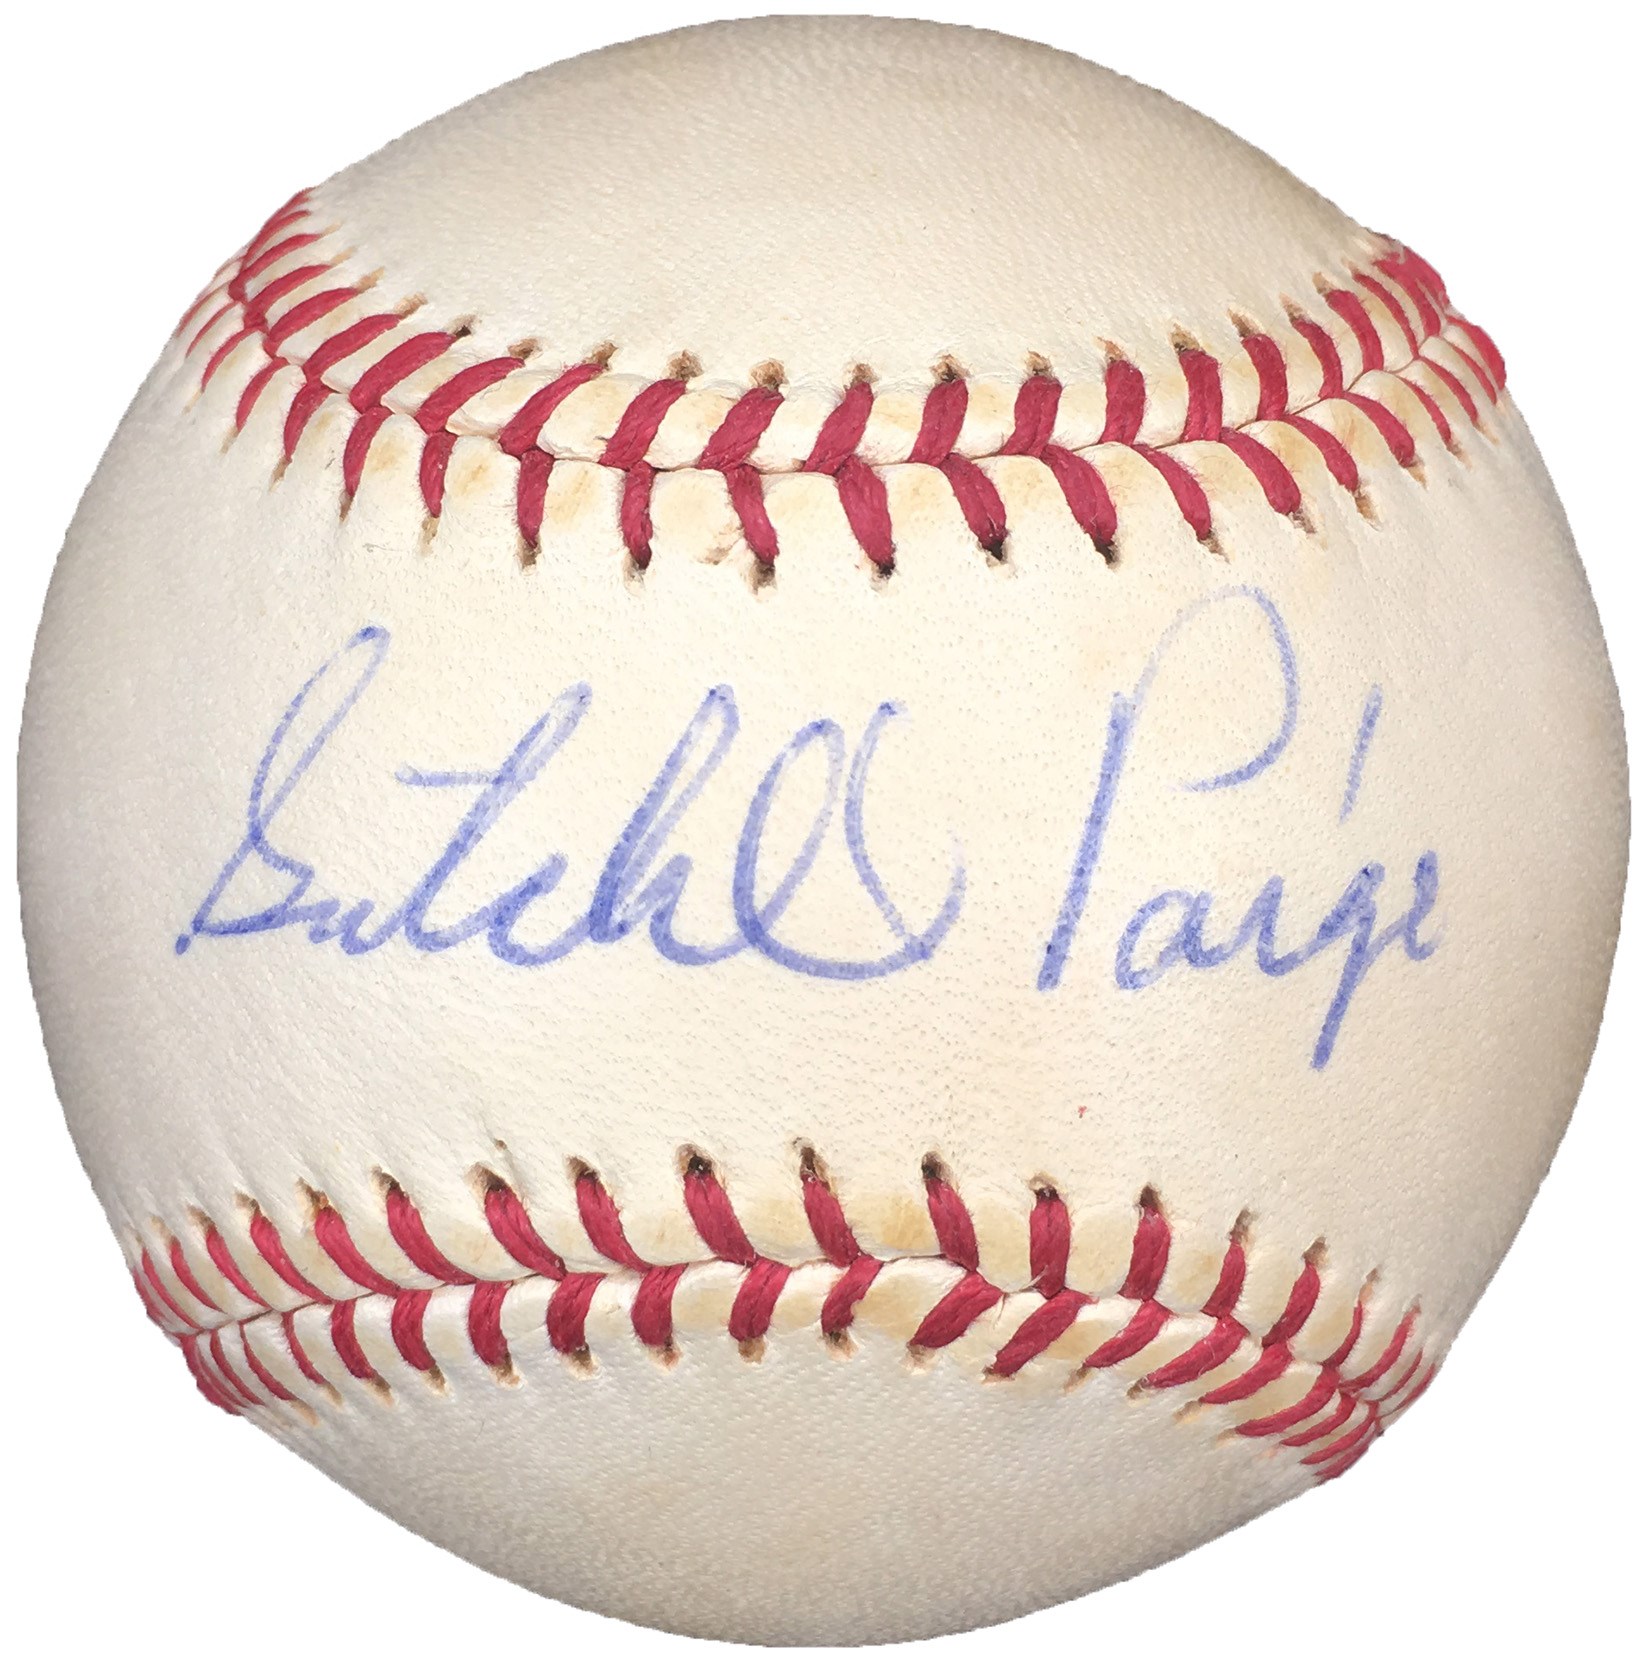 - Outstanding Satchel Paige Single-Signed Baseball w/Tremendous Provenance (PSA)